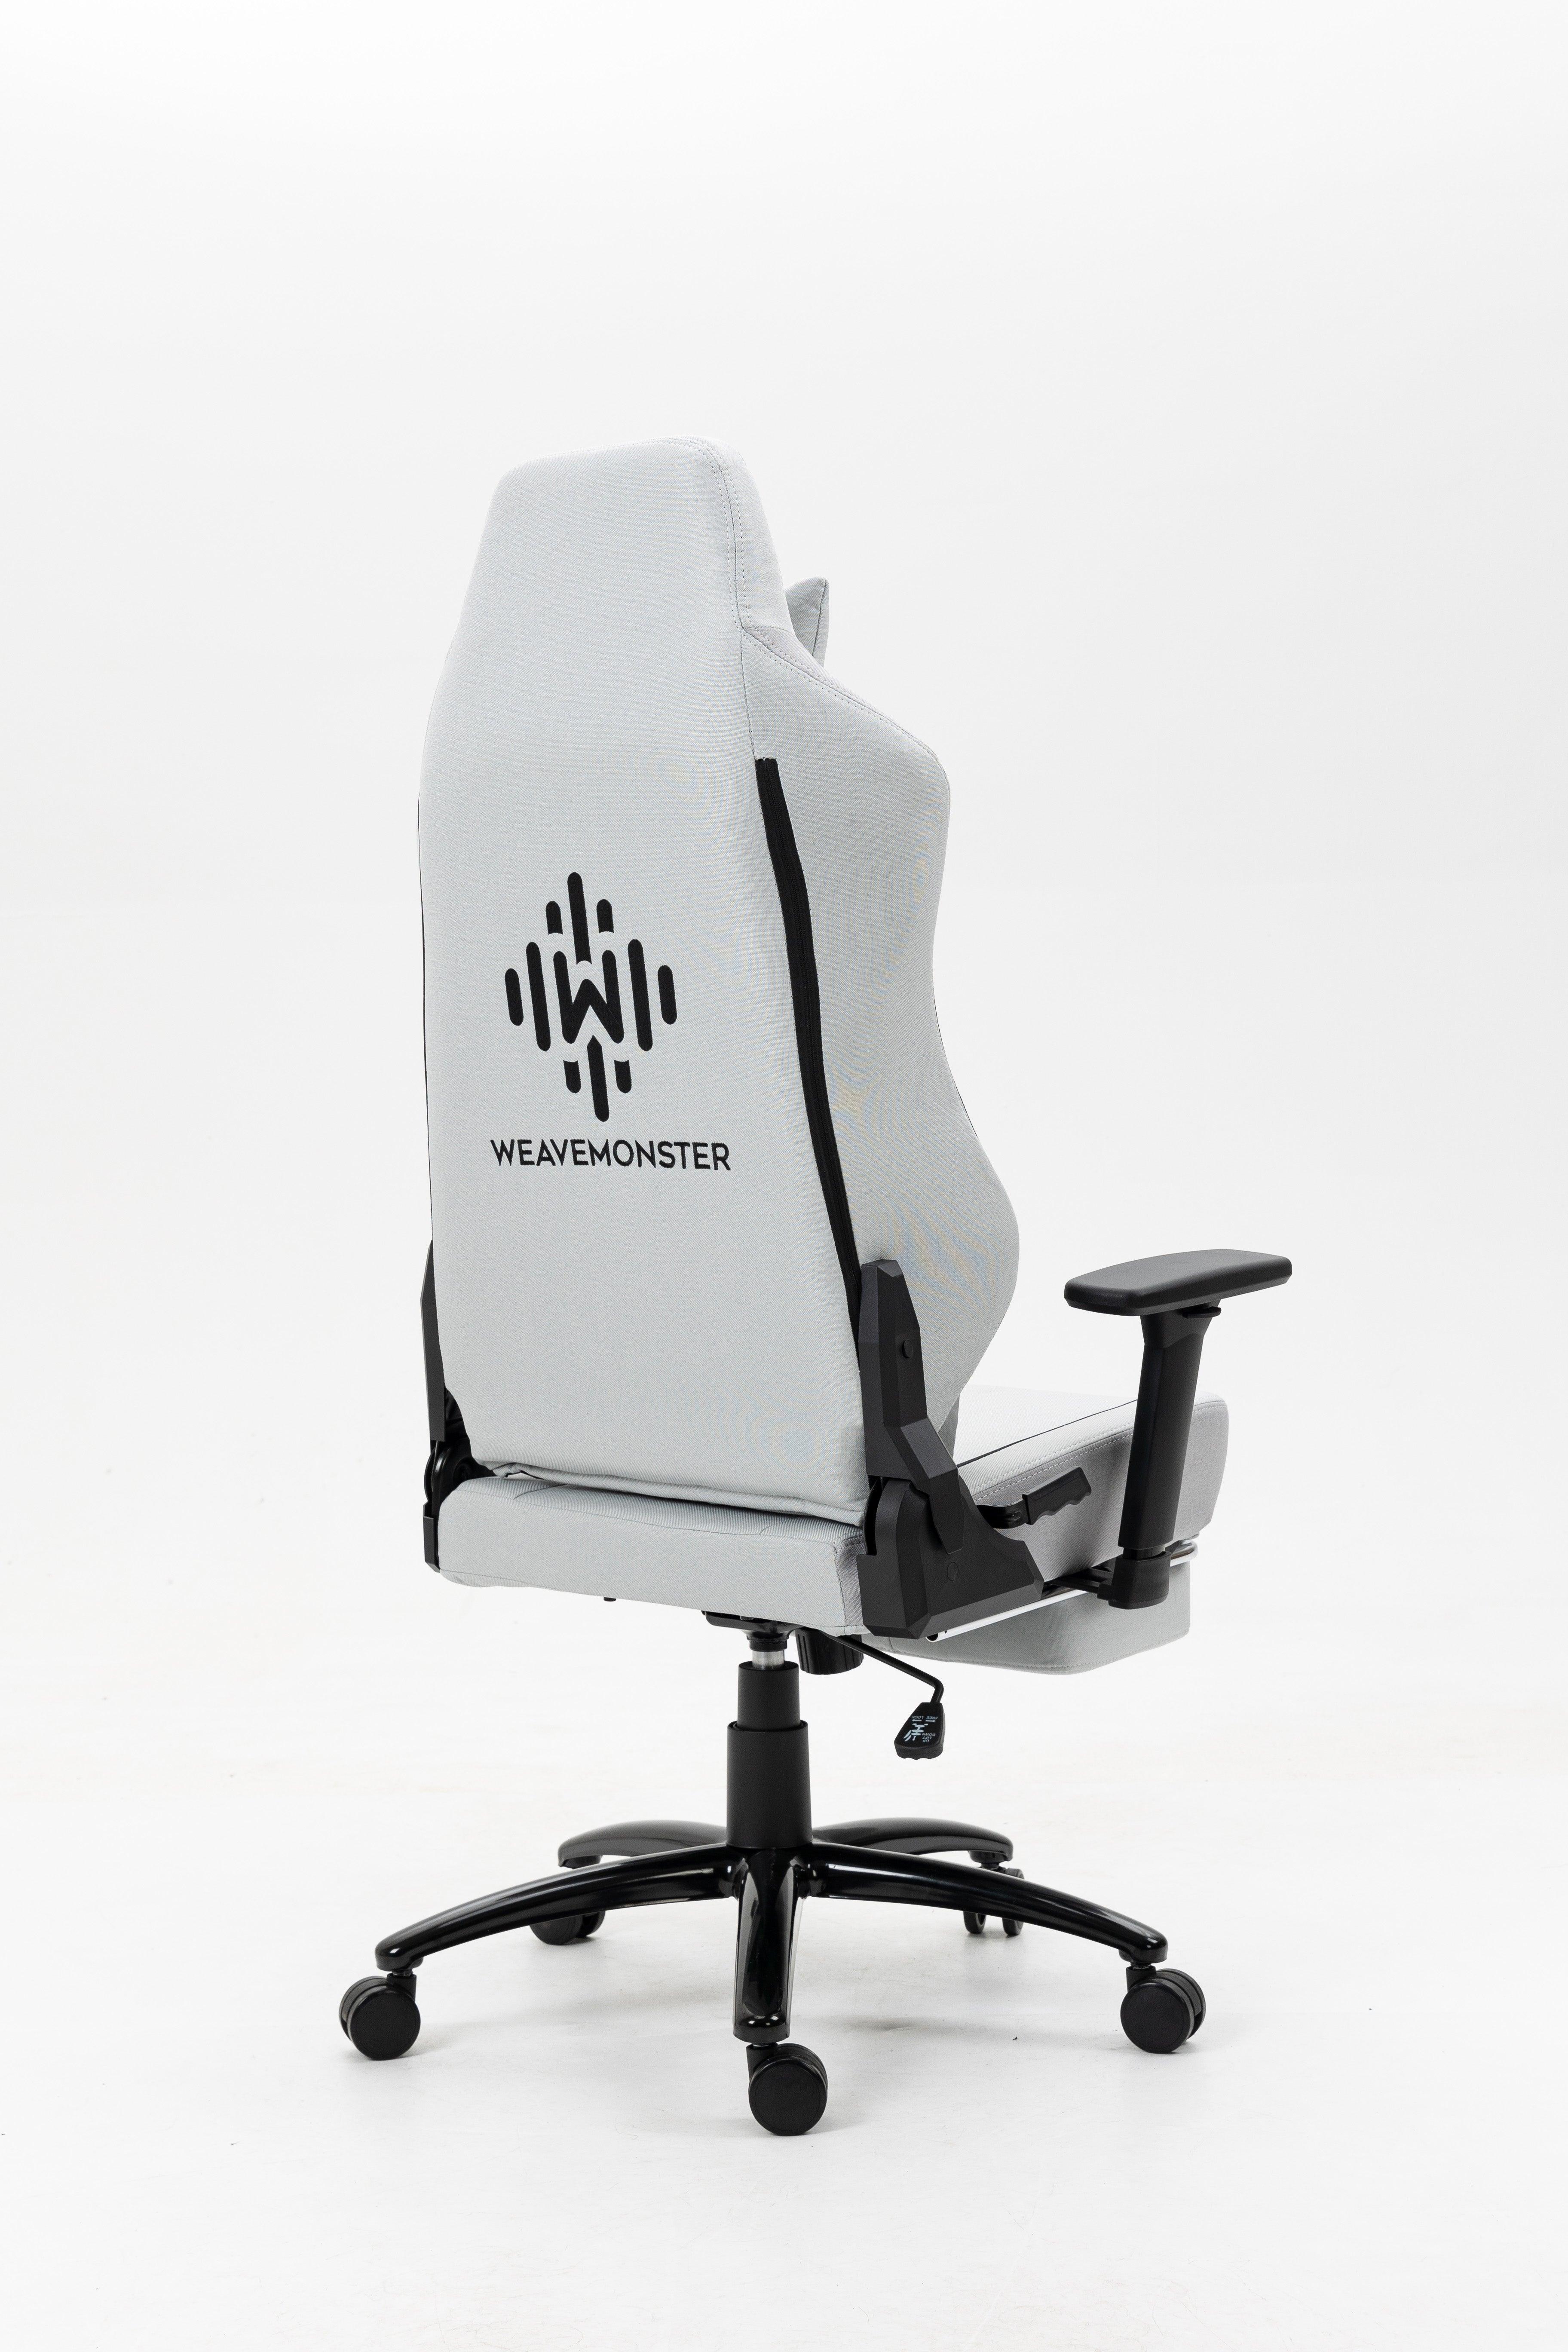 DrLuxur WEAVEMONSTER Gaming Chair - DrLuxur